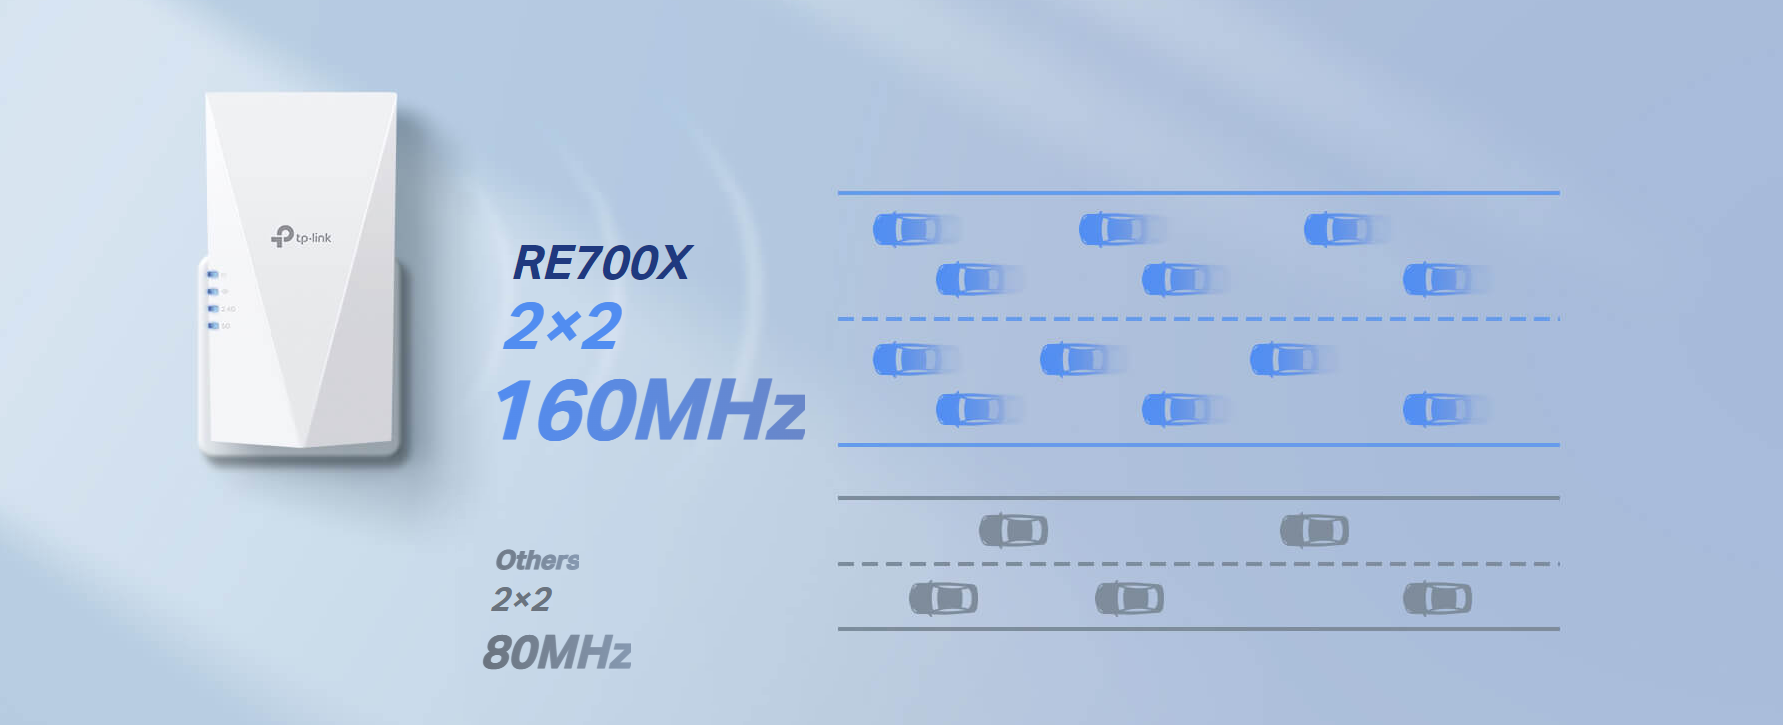 TP-Link RE700X AX3000 OneMesh Wi-Fi 6 Range Extender Setup & Review 